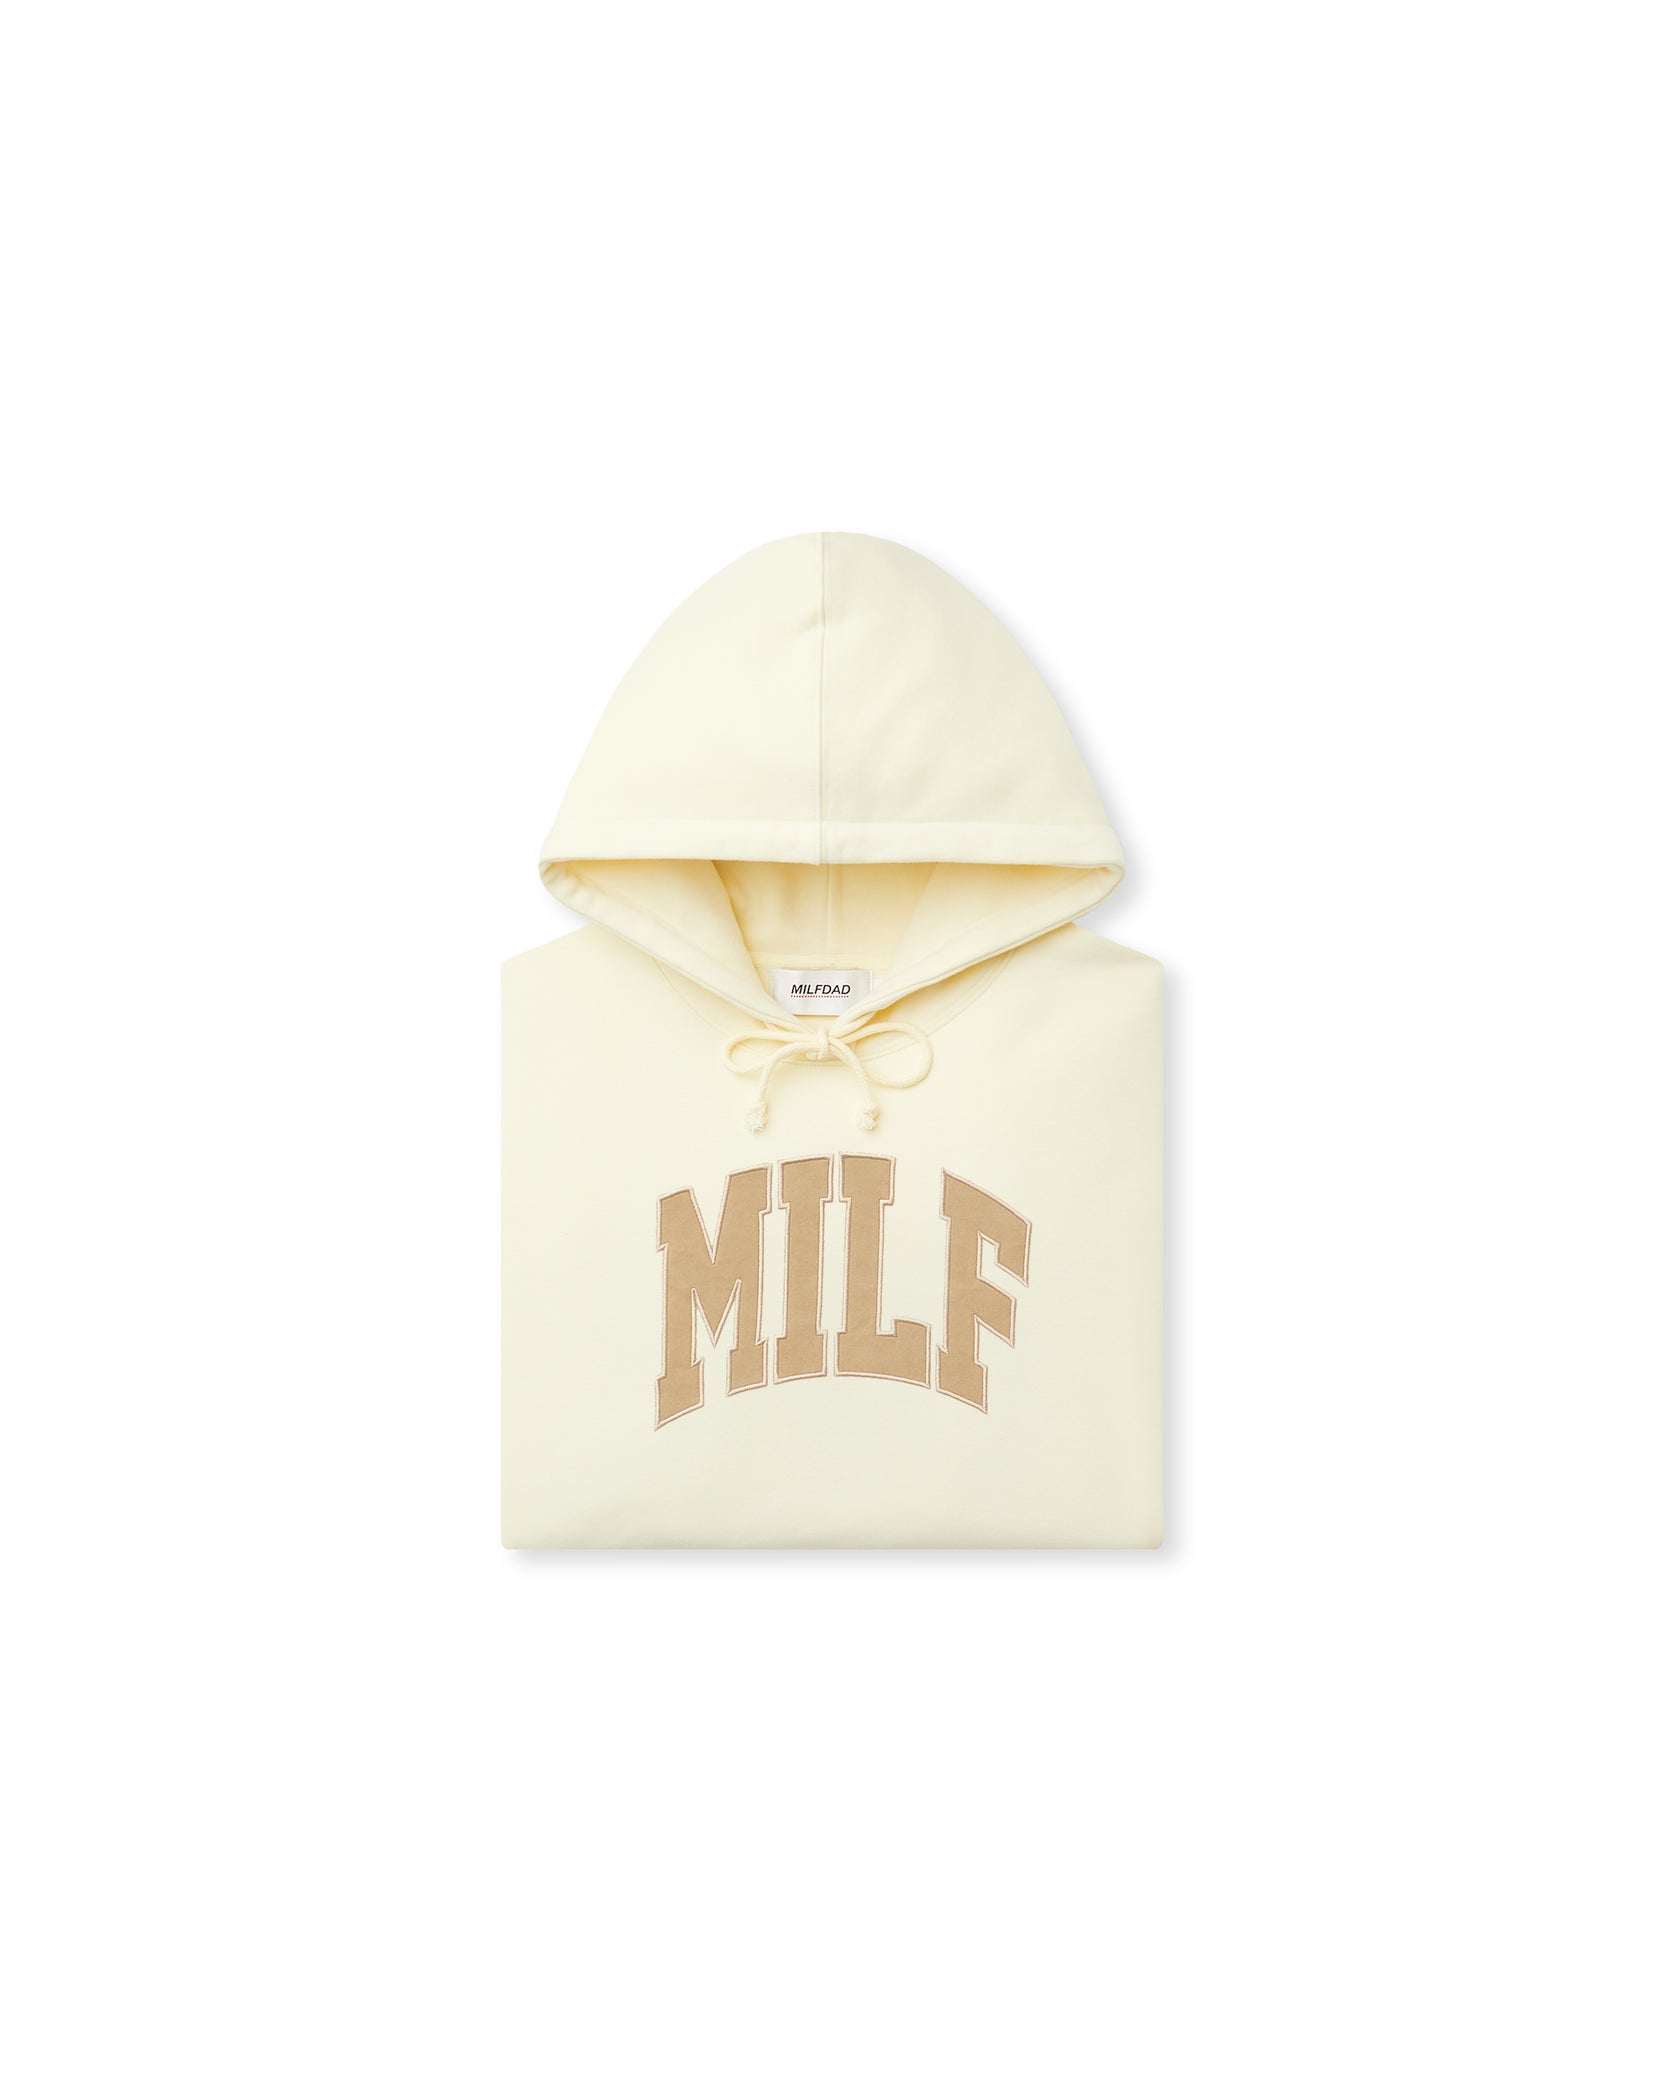 MILF Arc Logo Hoodie - Cream